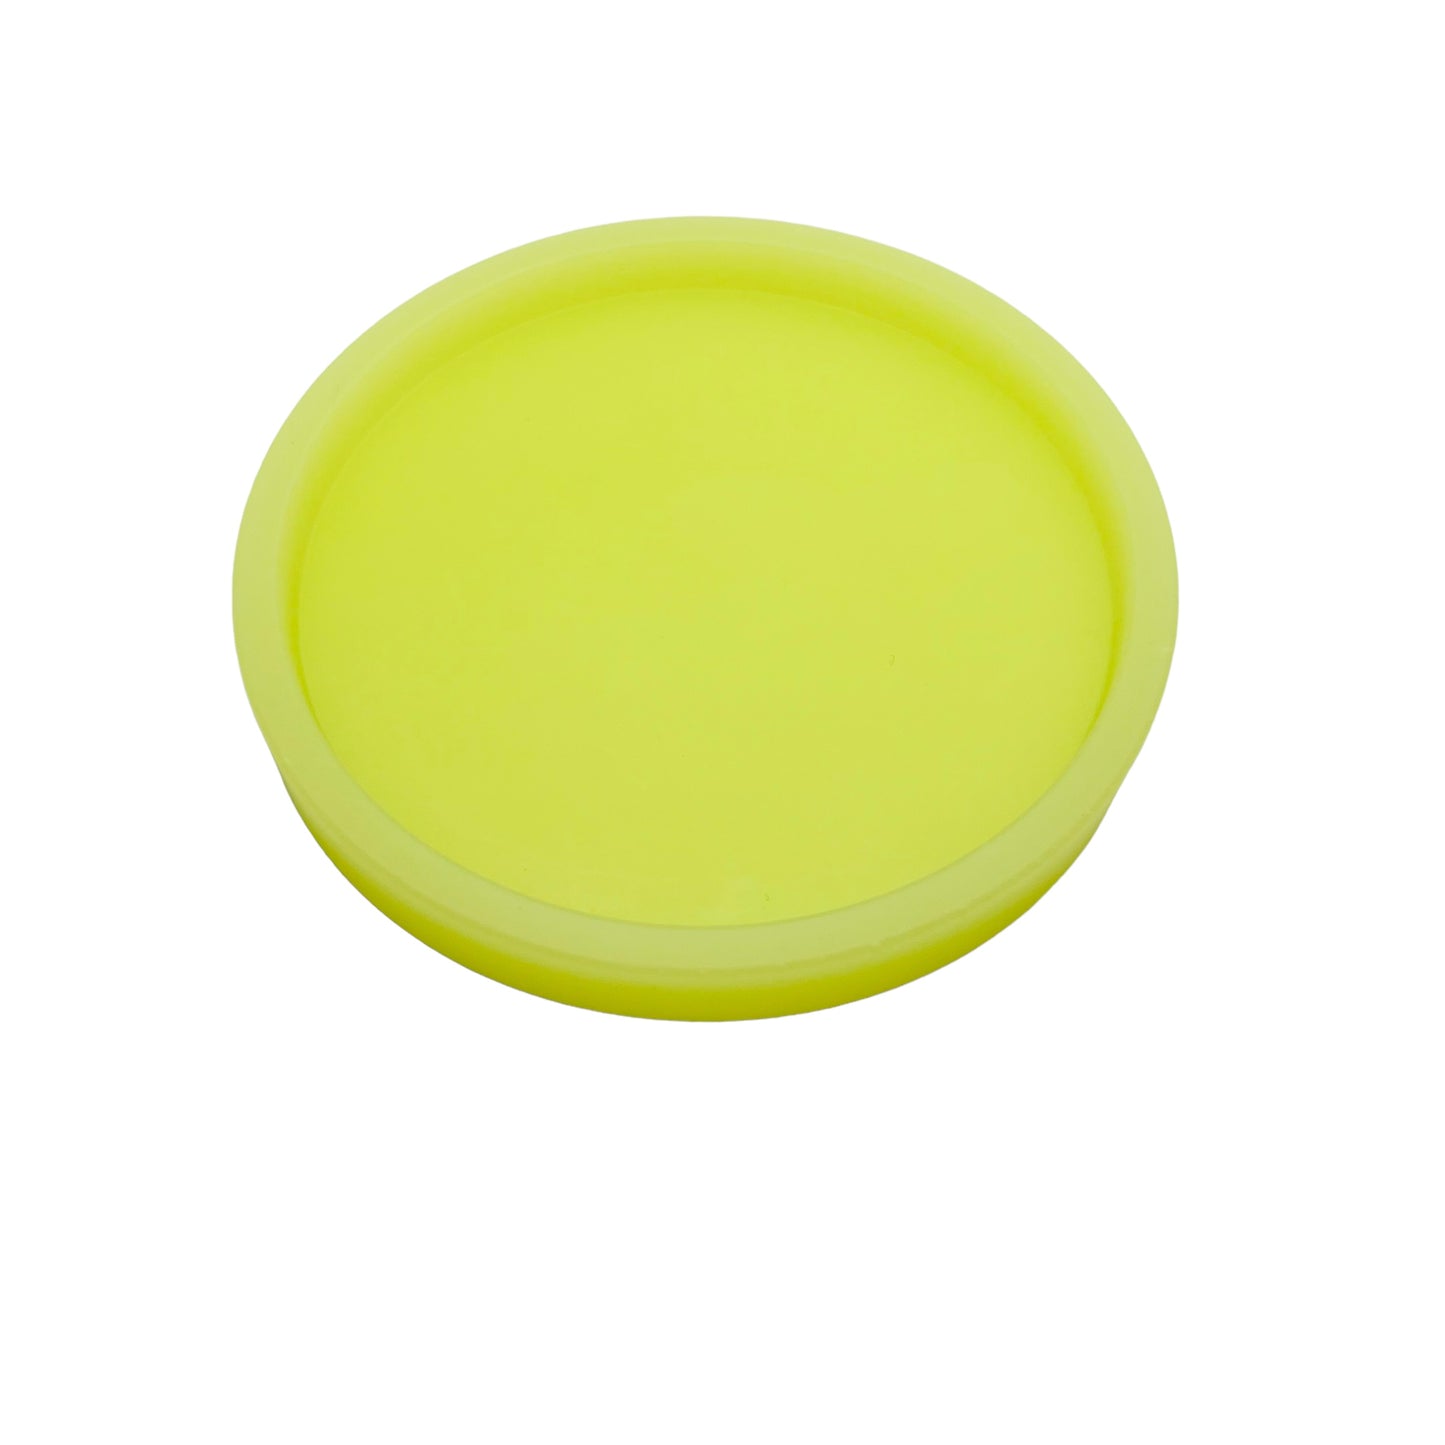 JenDore Bandeja de tocador circular con brillo amarillo neón hecha a mano